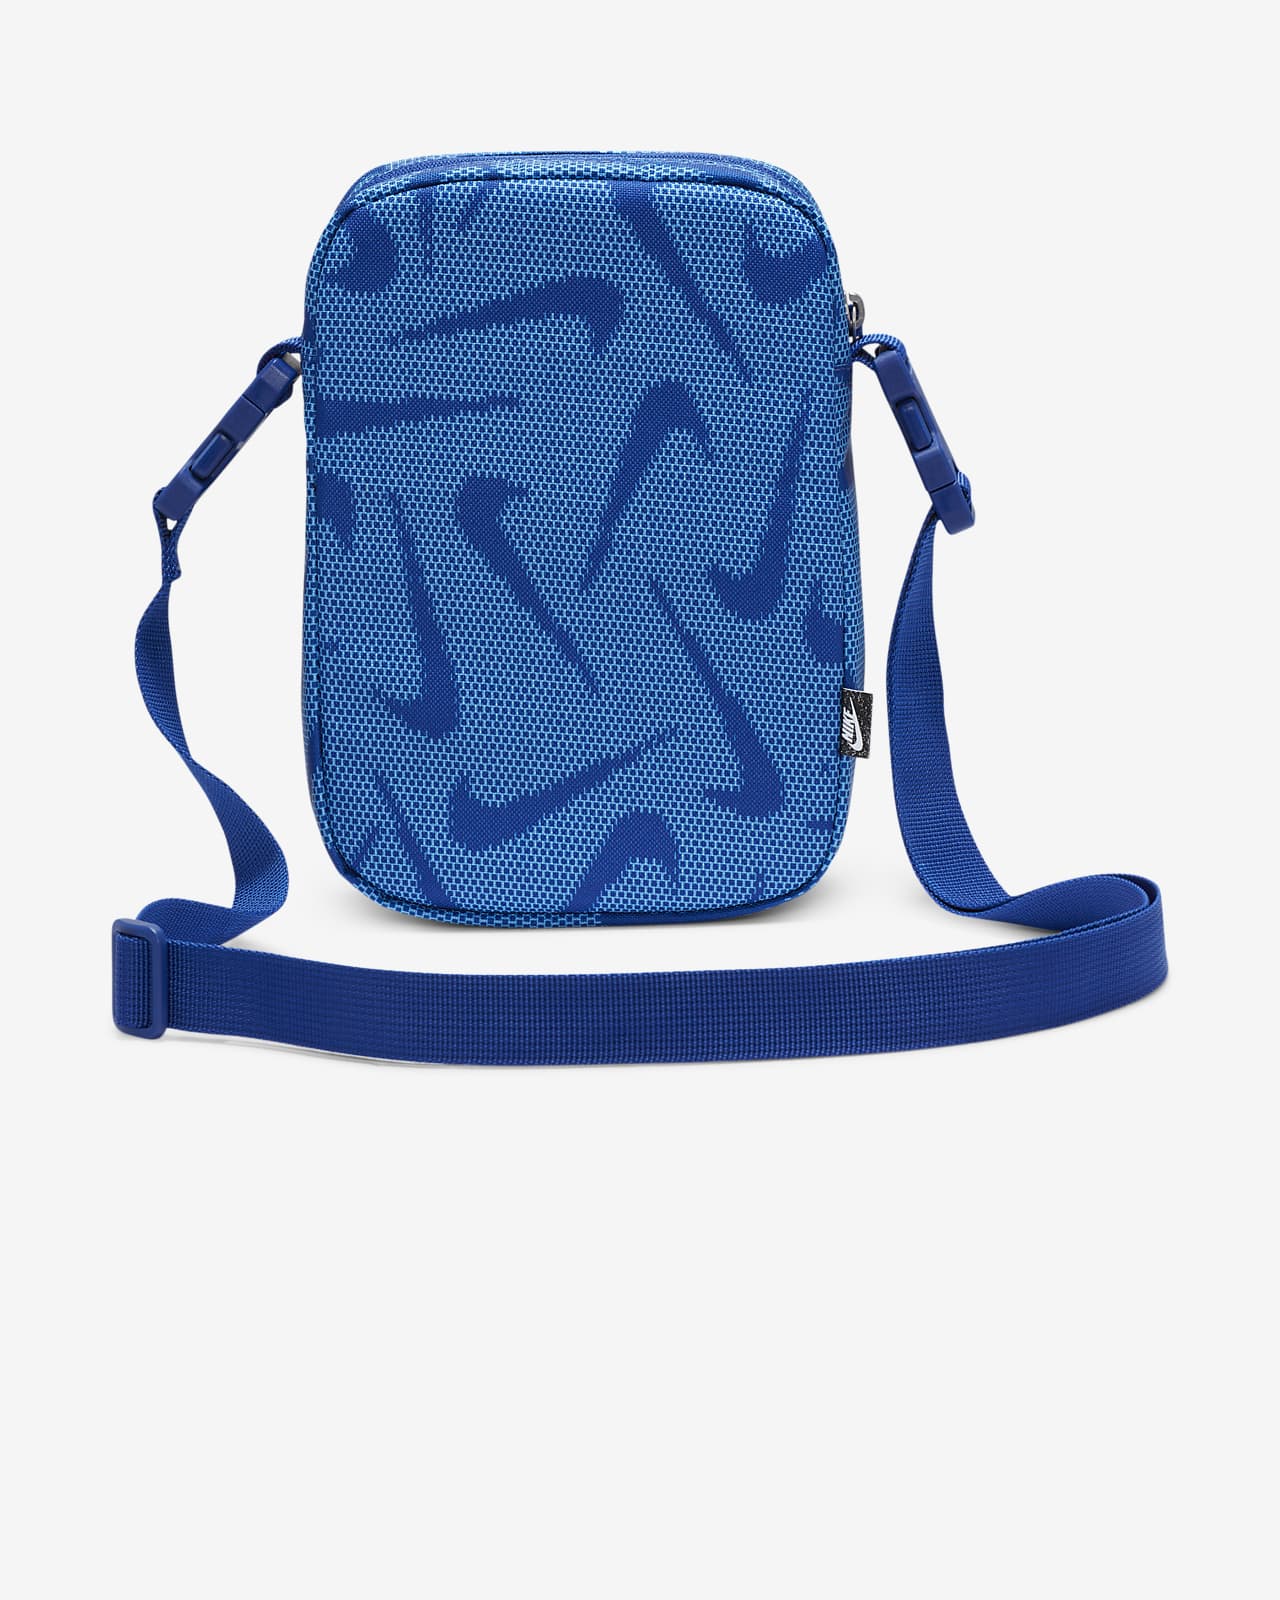 Nike Air Max Cross-body Bag (4L). Nike ID